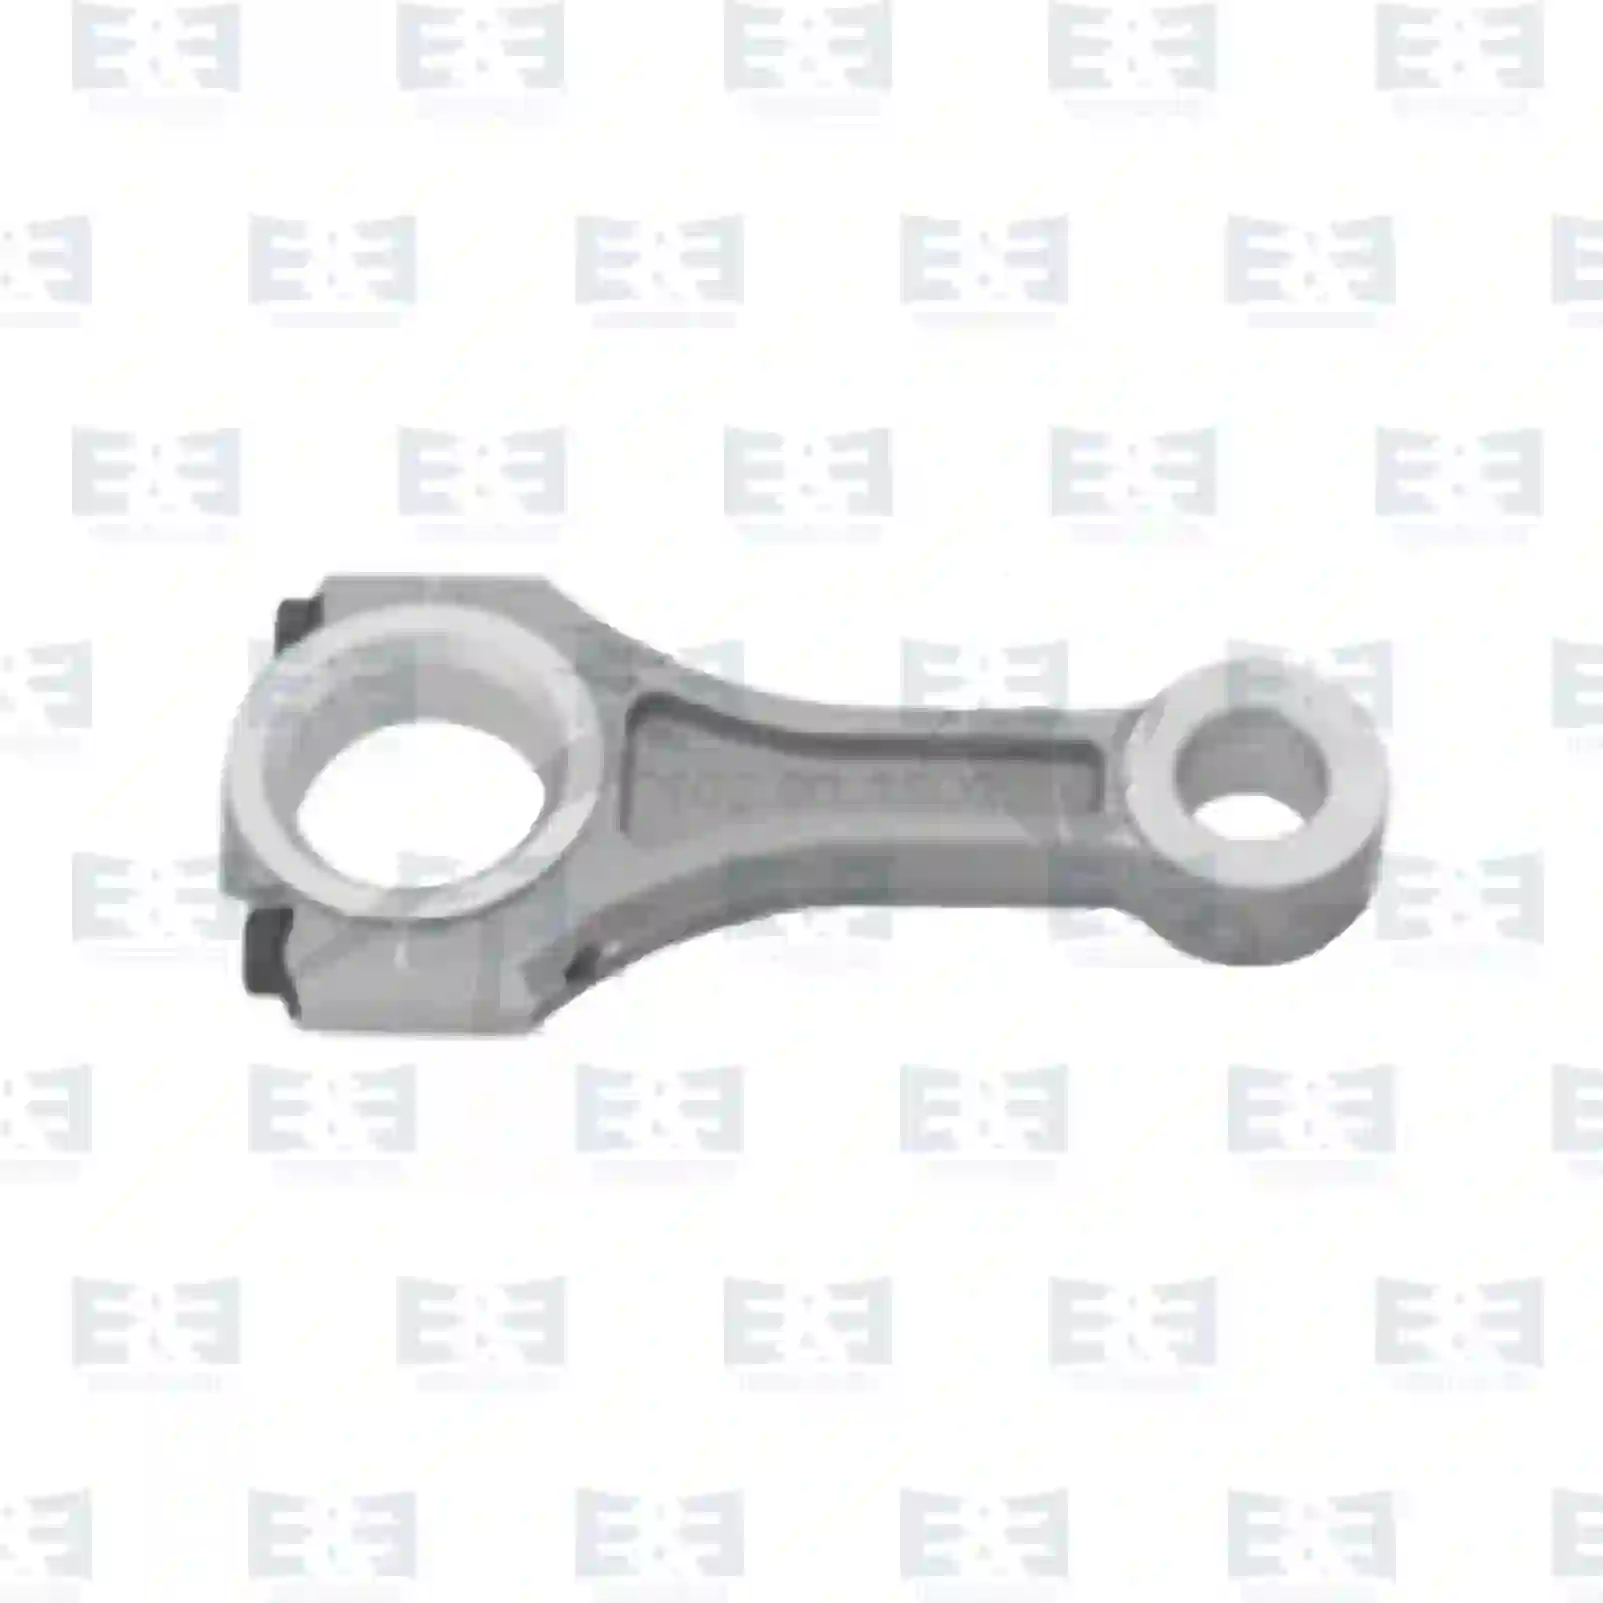  Connecting rod || E&E Truck Spare Parts | Truck Spare Parts, Auotomotive Spare Parts